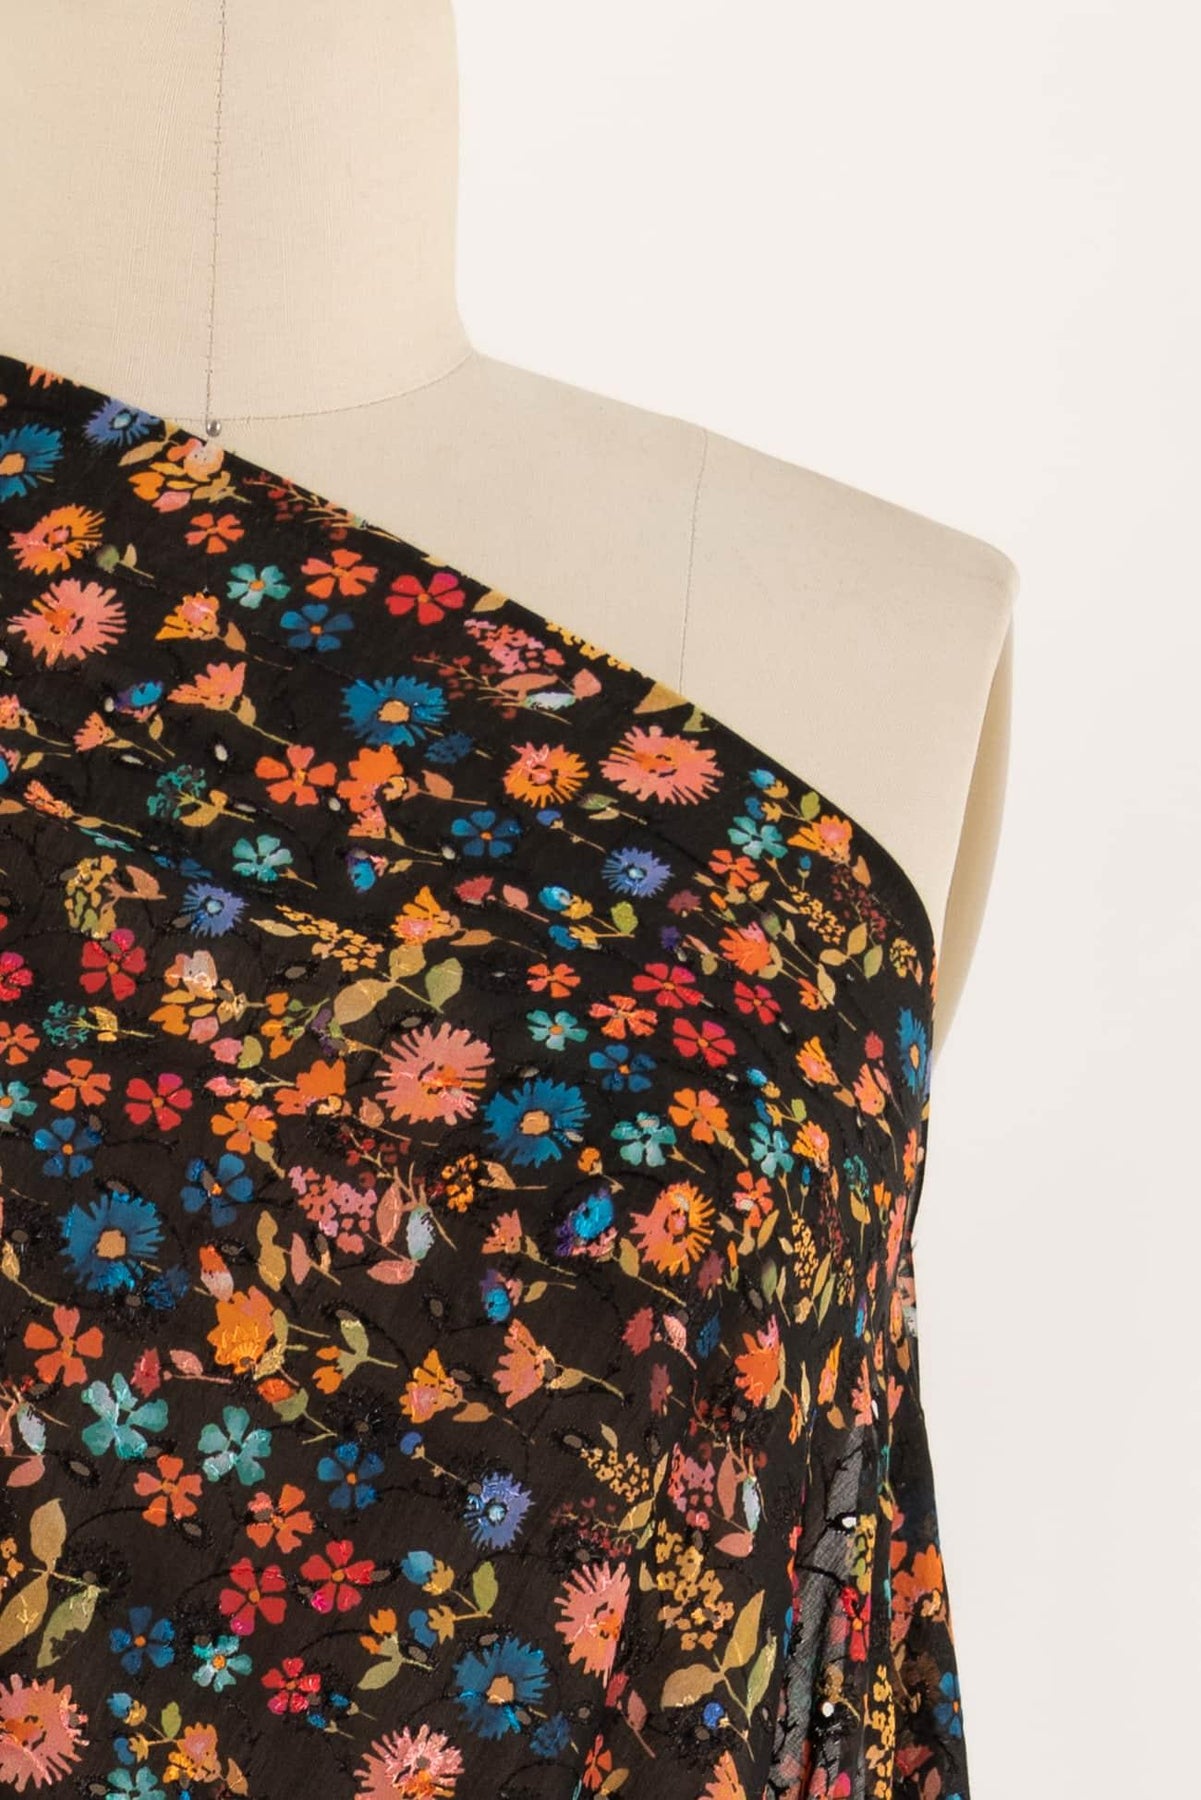 Marcy Tilton Fabric Store | Designer Fabrics for Fashion, Decor & More ...